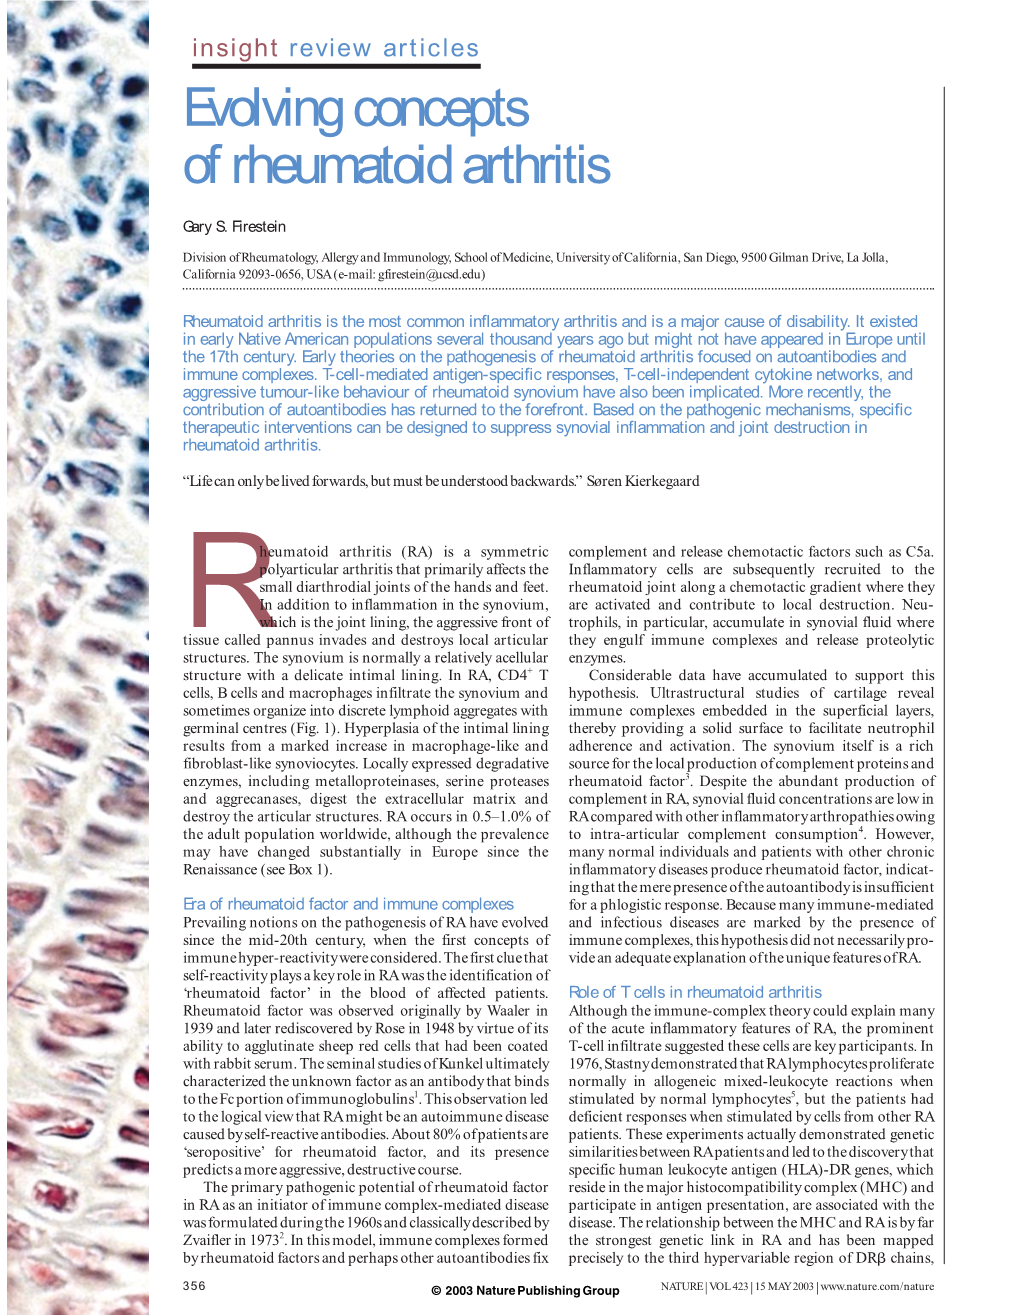 Evolving Concepts of Rheumatoid Arthritis